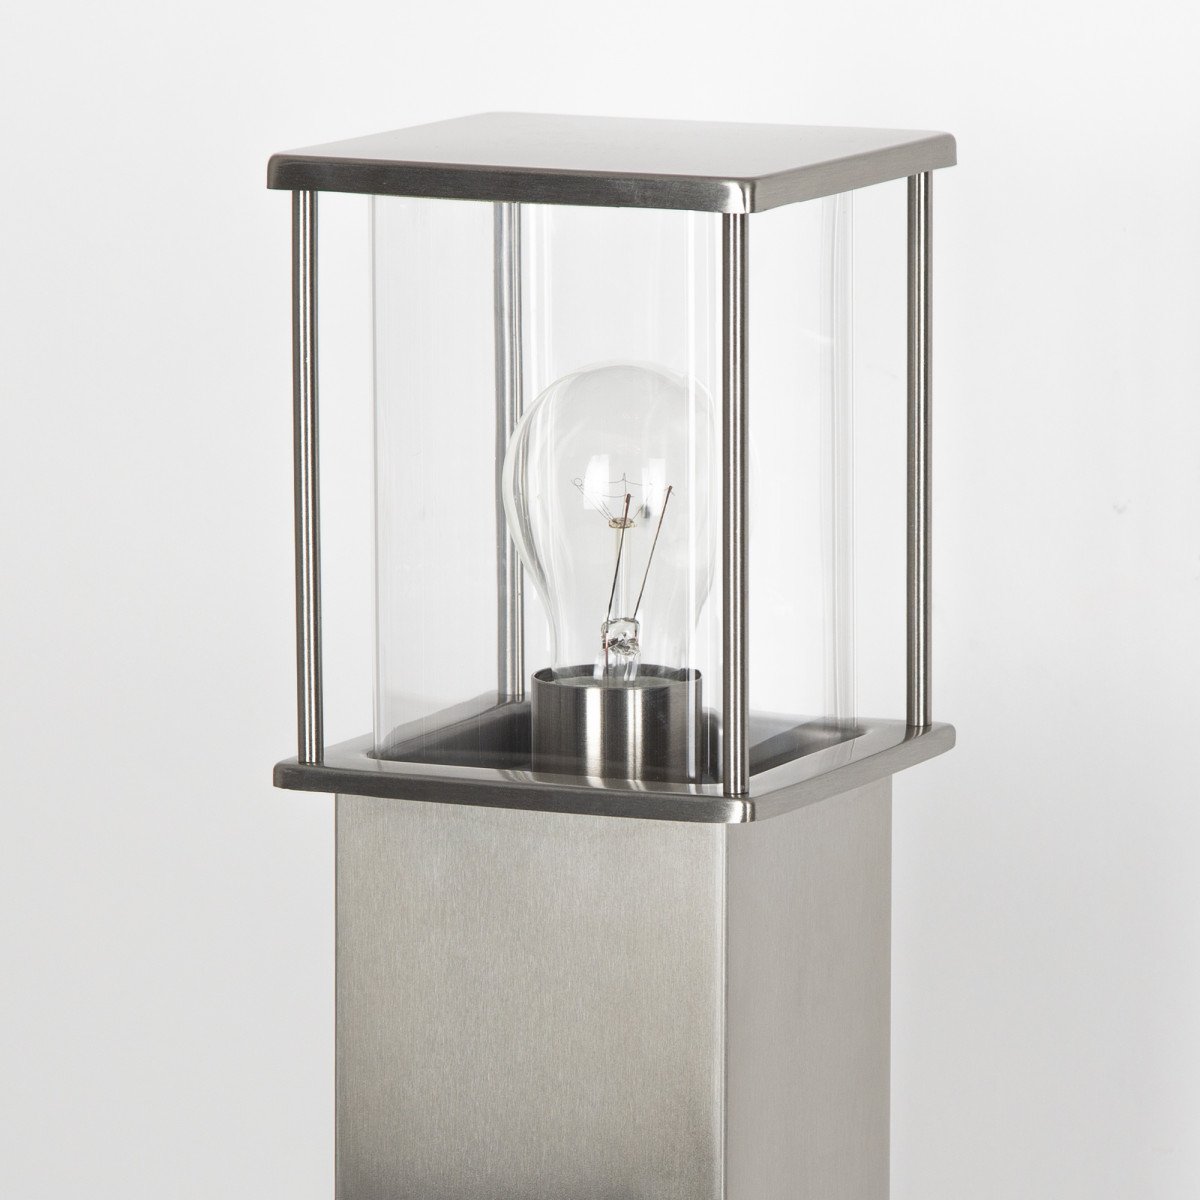 rvs tuinlamp, staande buitenverlichting, vierkante paal met box design lantaarnkap, heldere beglazing, rondom lichtval, E27 fitting, 70cm hoog